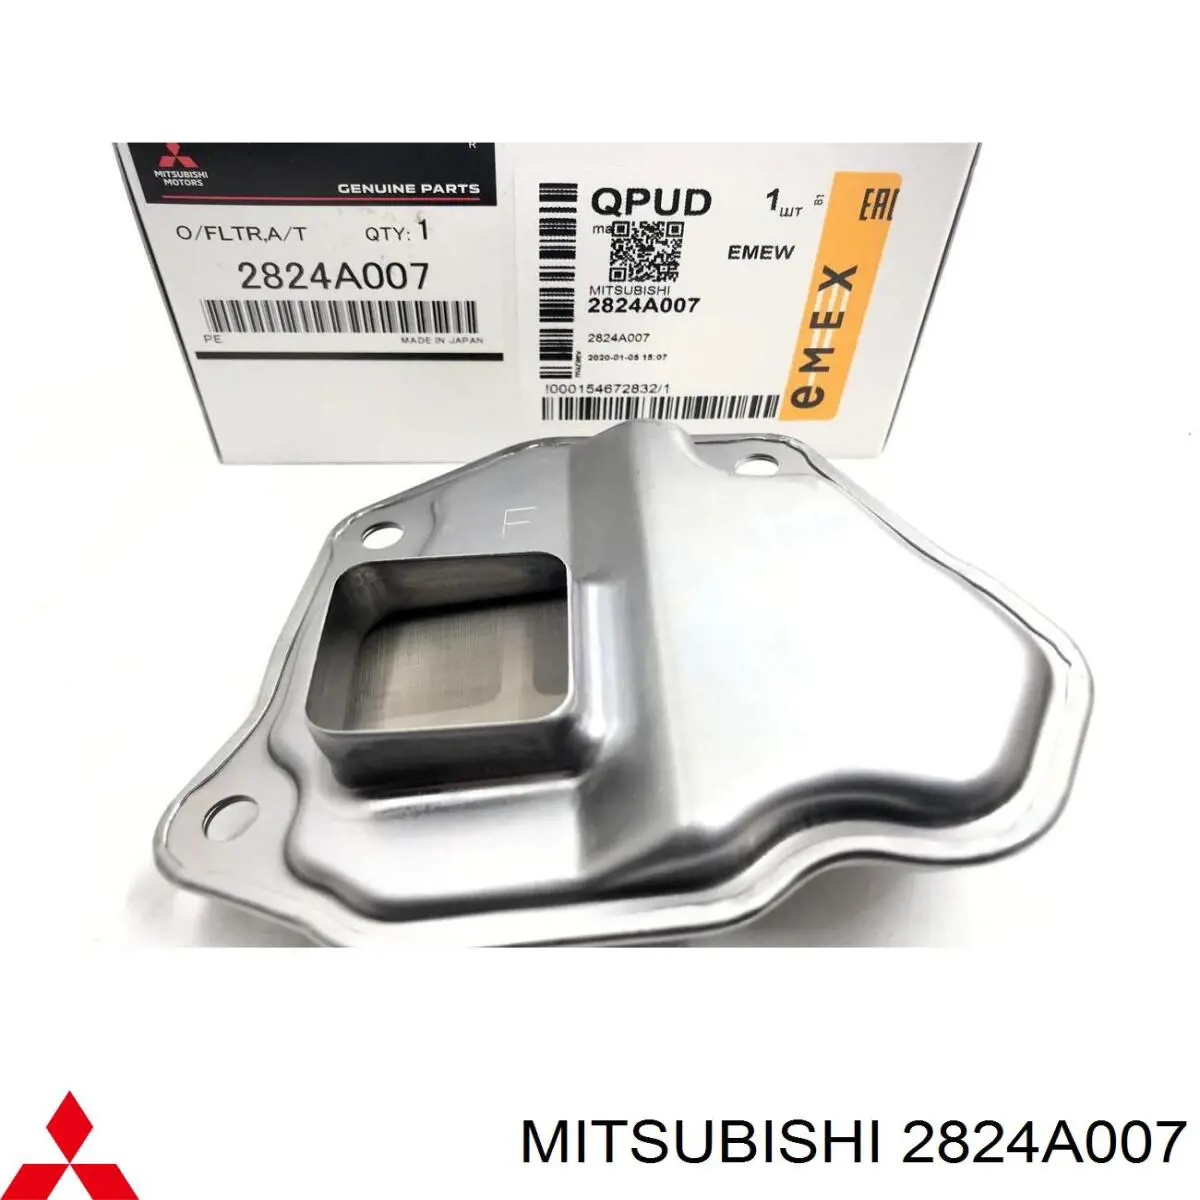 2824A007 Mitsubishi filtro da caixa automática de mudança